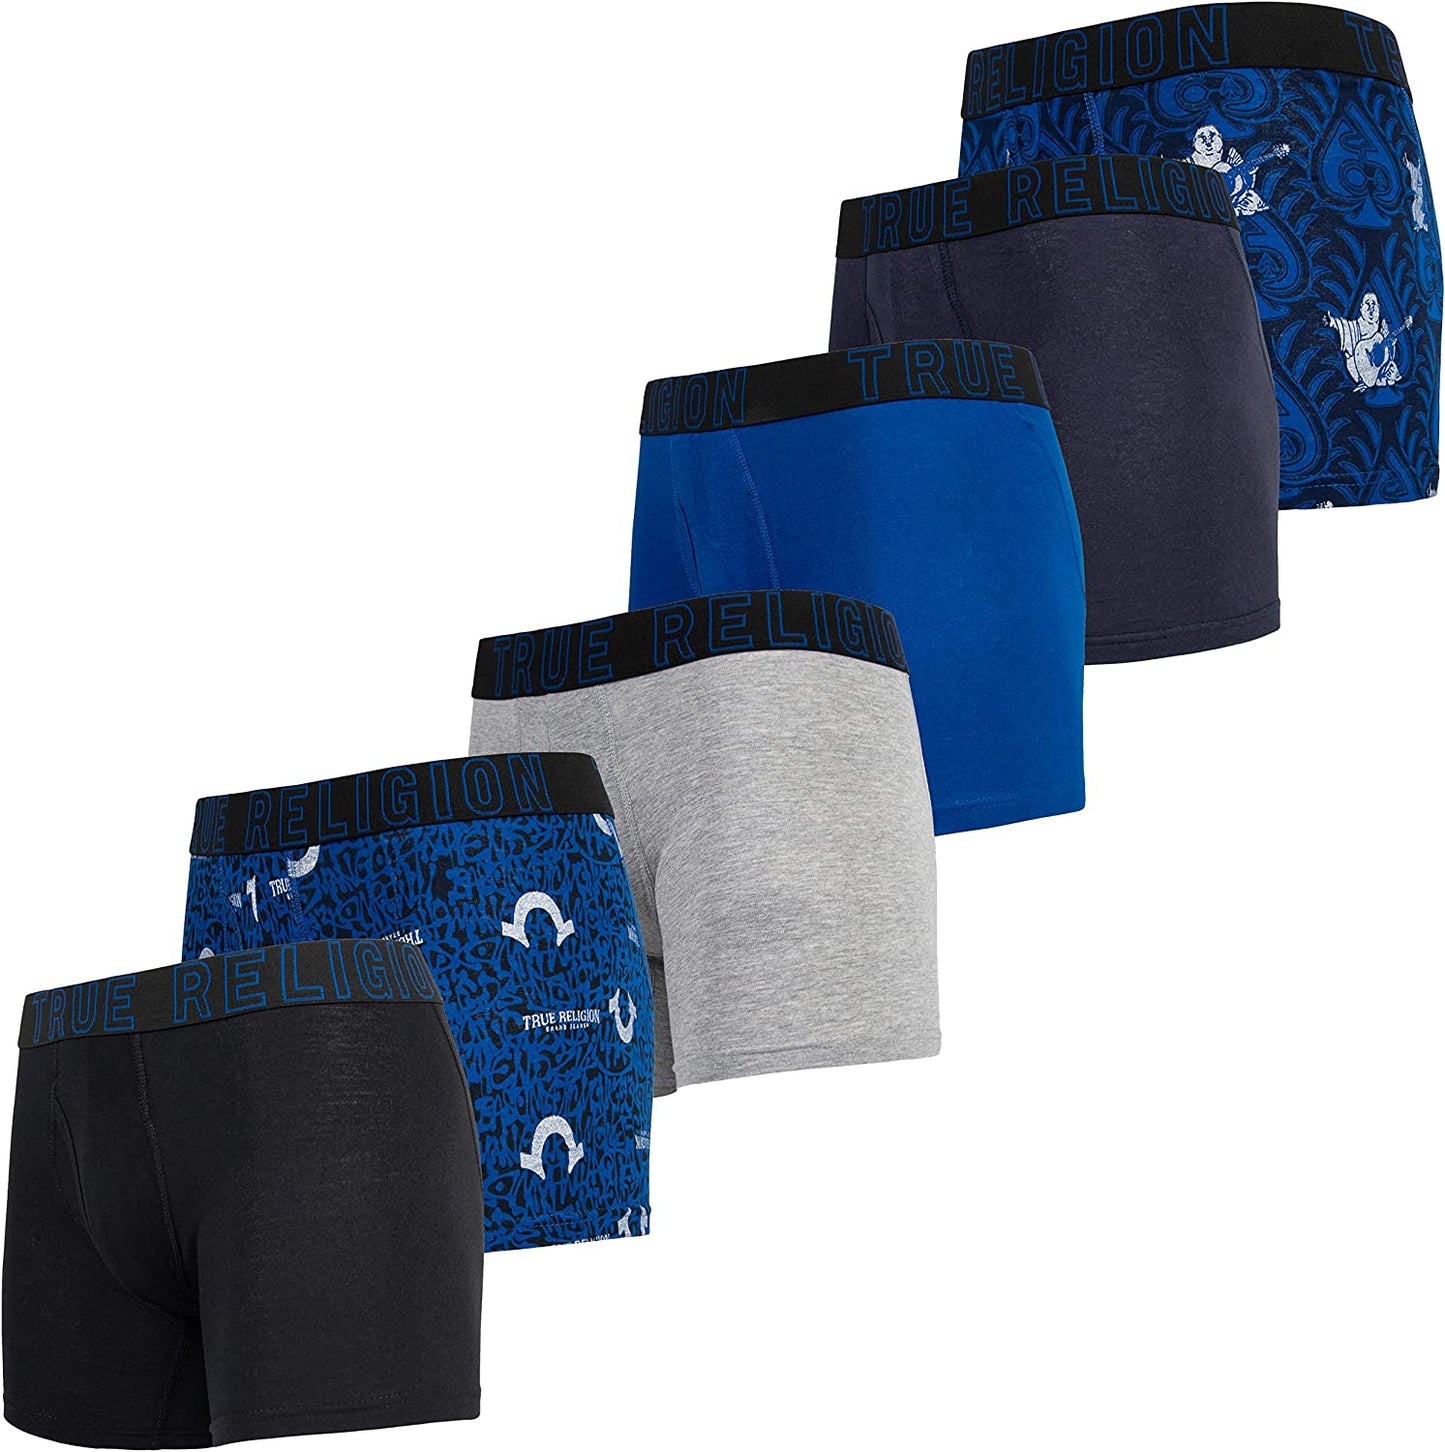 Mens Boxer Briefs – Compression Underwear for Men Pack, 6-Pack